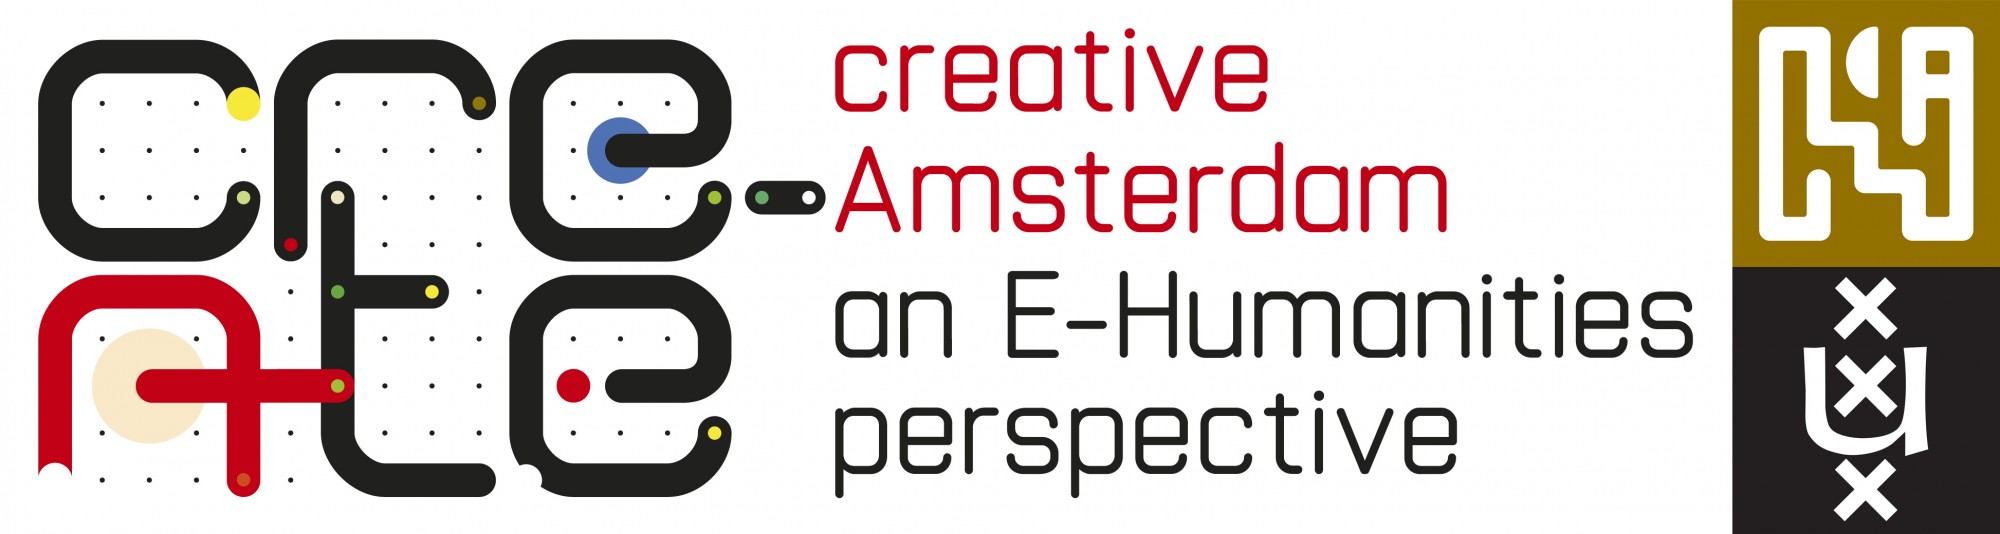 CREATECreative Amsterdam: An E-Humanities Perspective